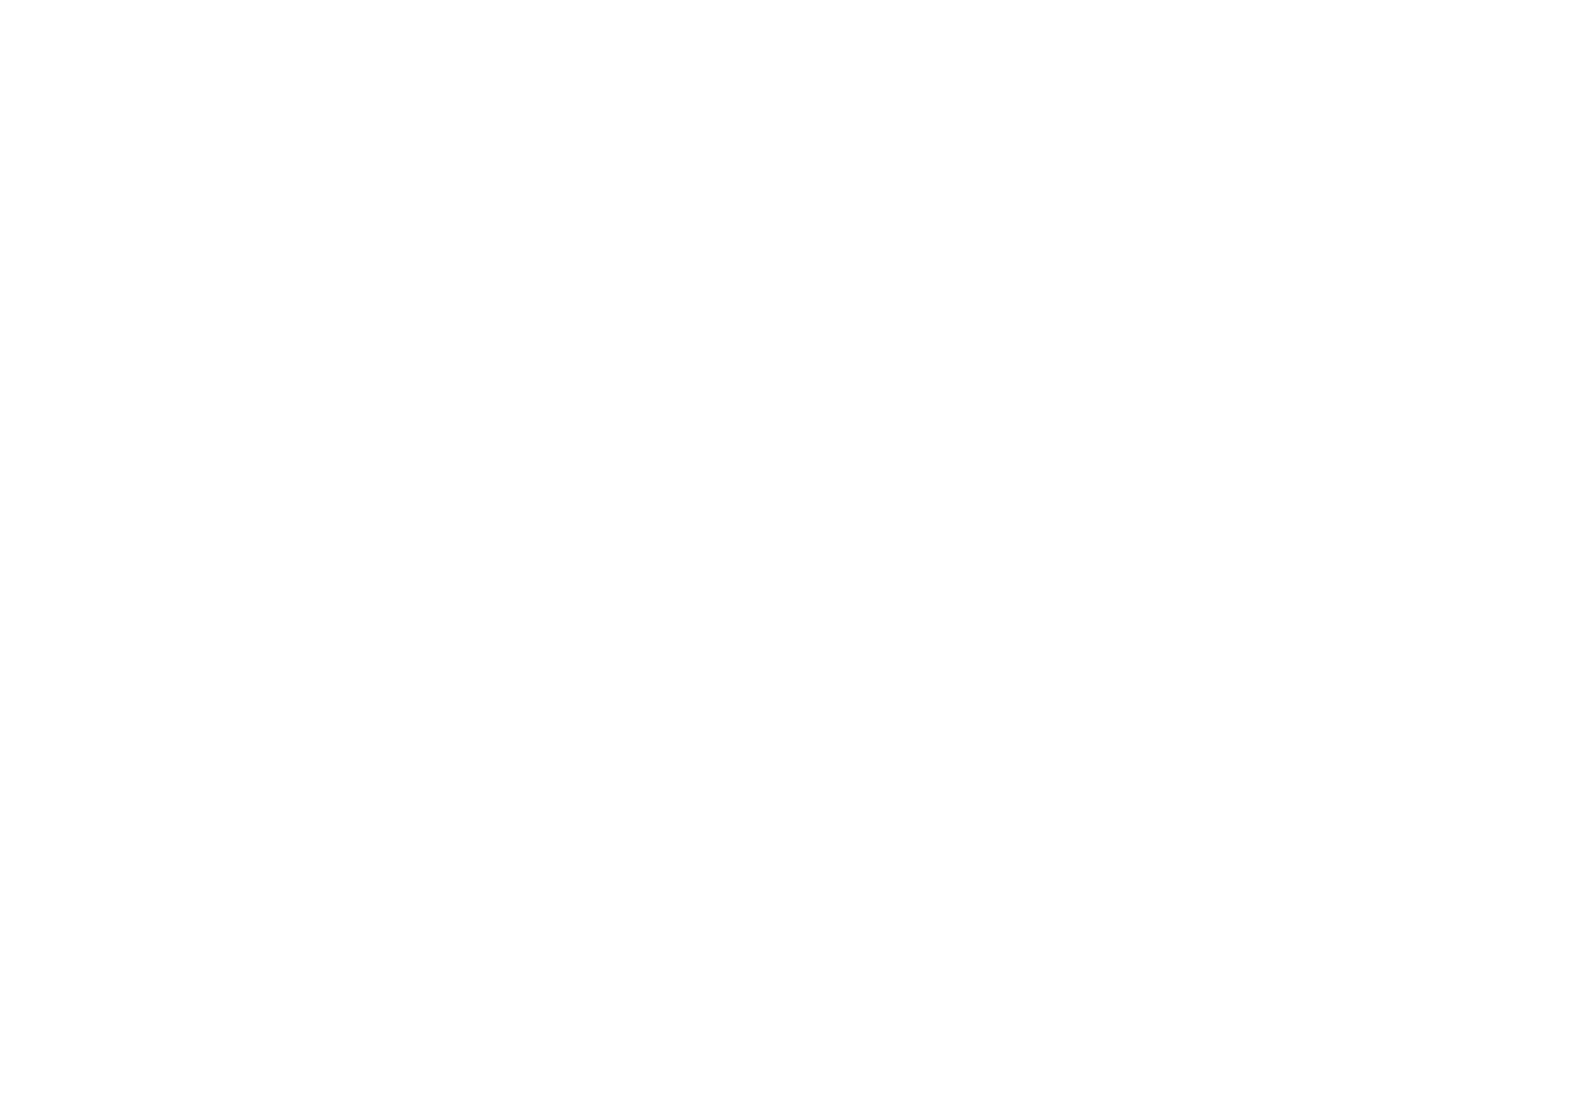 E2open logo for dark backgrounds (transparent PNG)